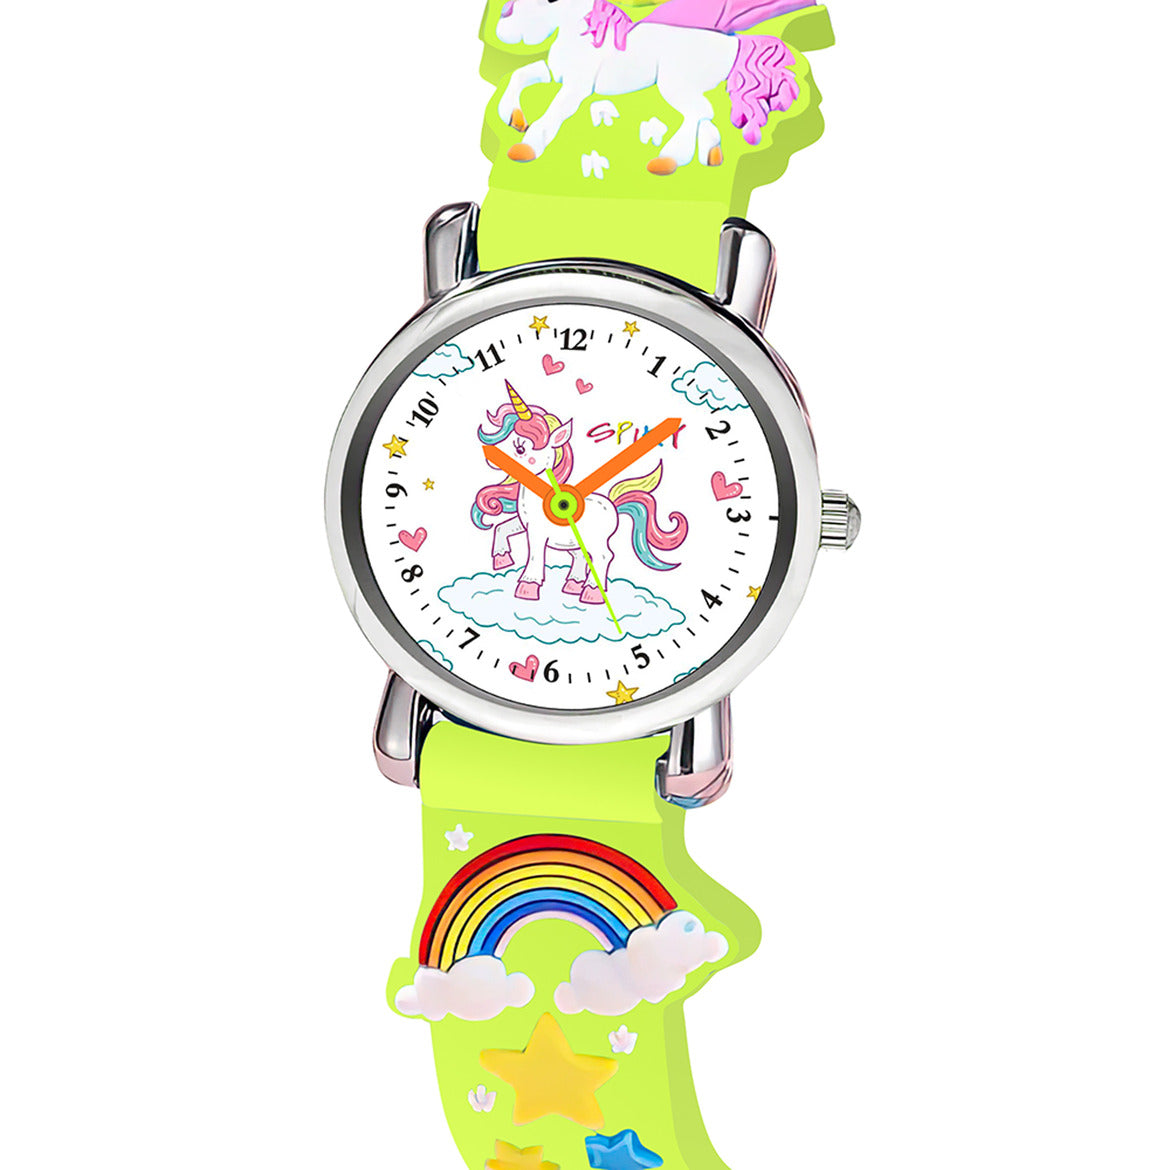 Spiky Round Unicorn Strap Analog Watch - Pink